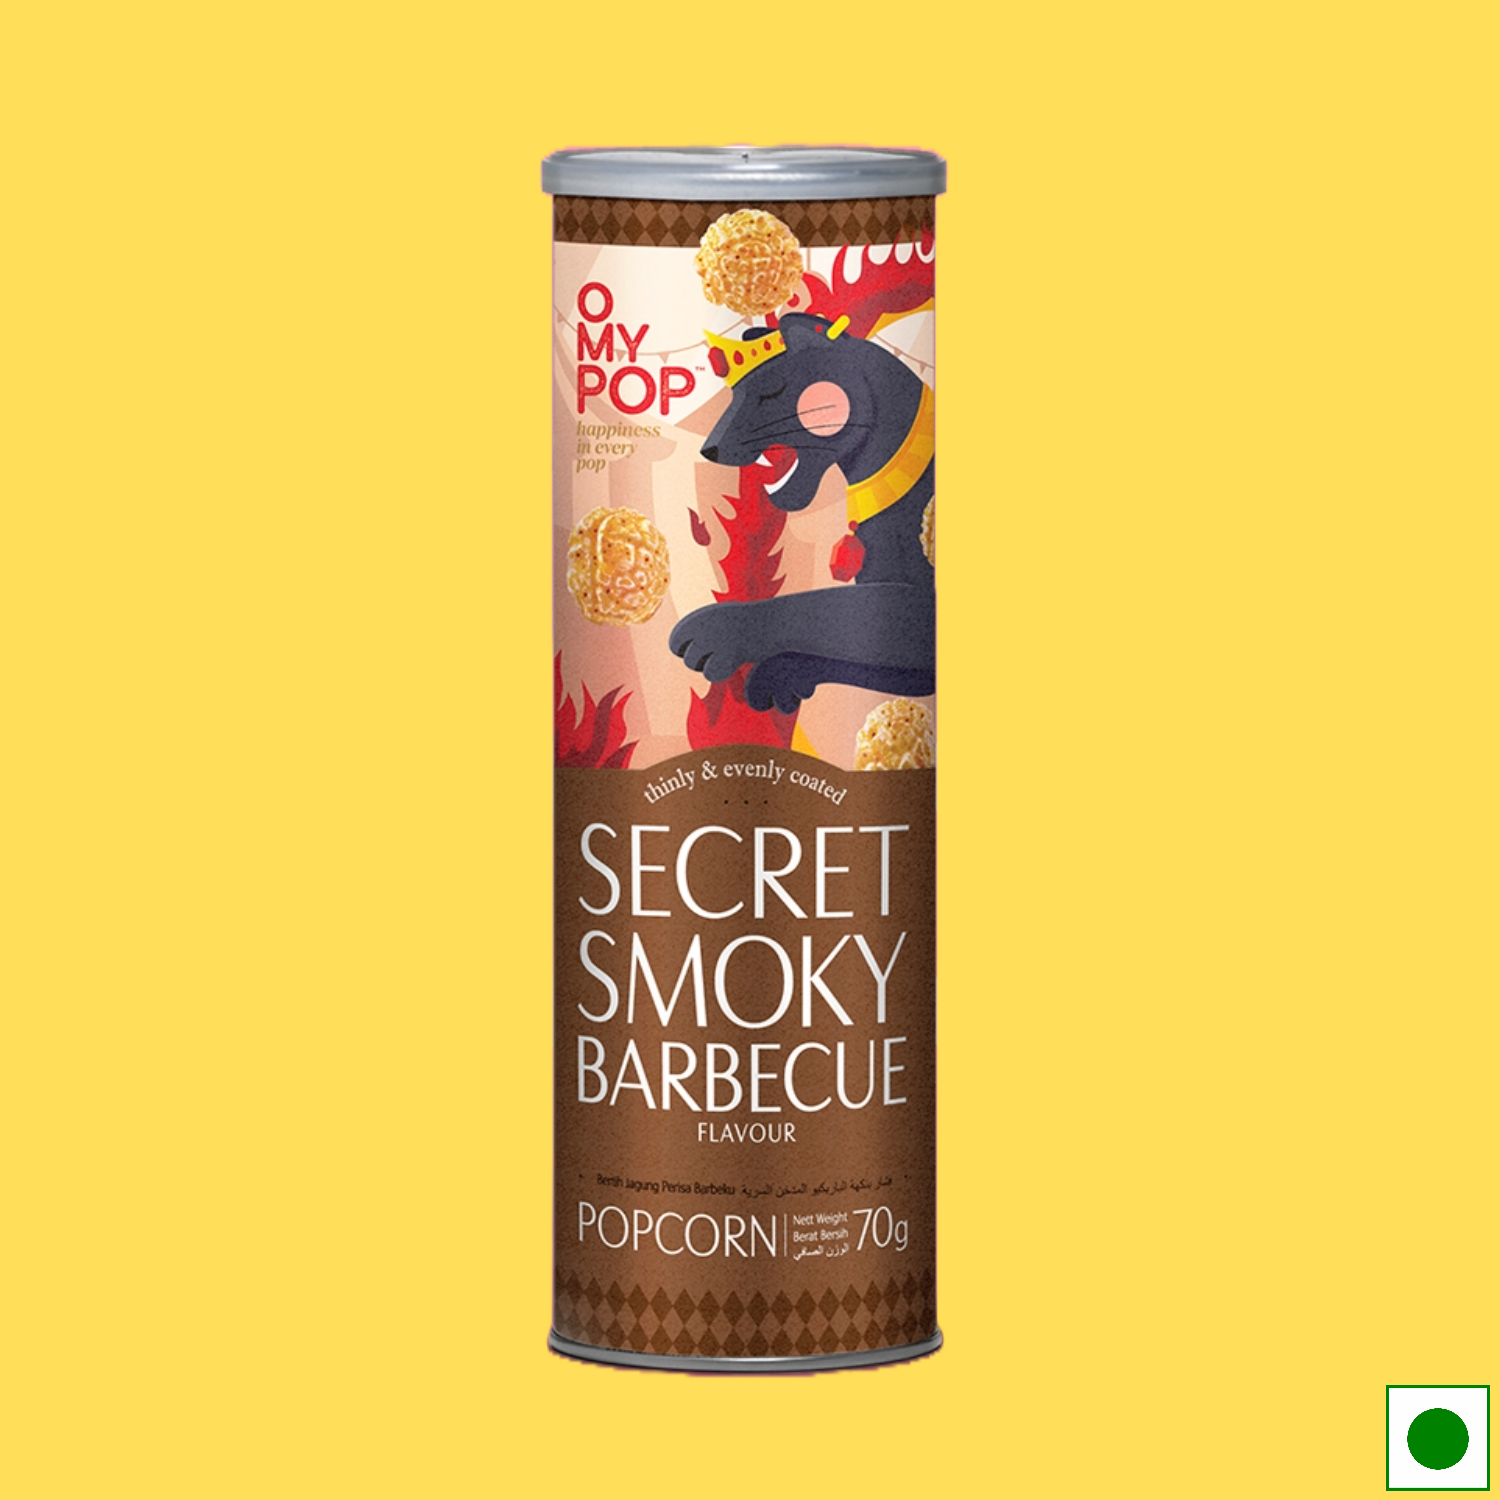 OMYPOP Secret Smoky Barbecue Popcorn, 70g (Imported)